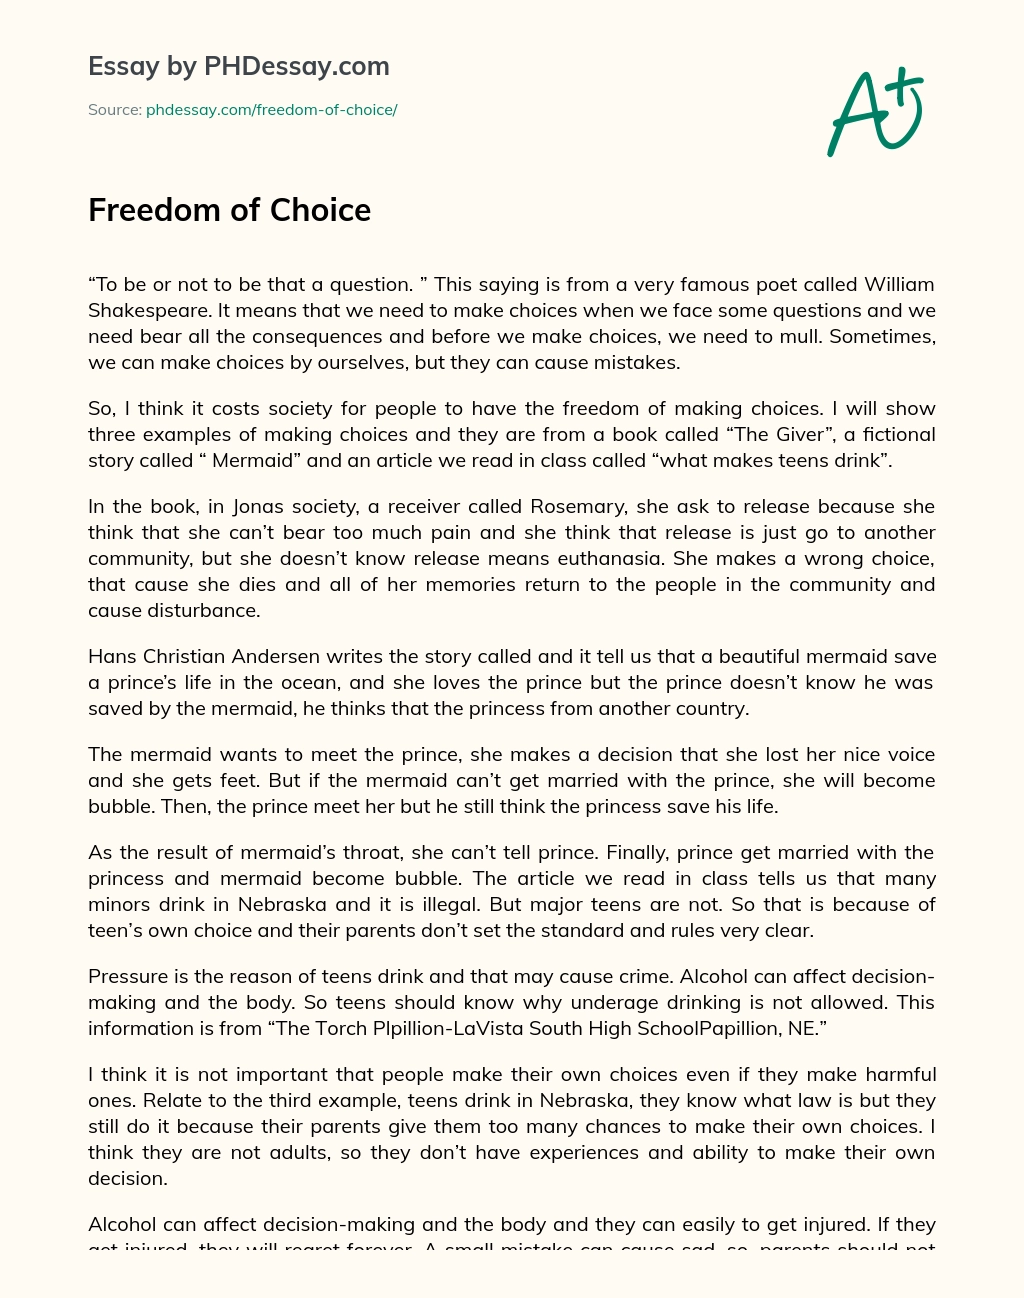 freedom of choice essay example